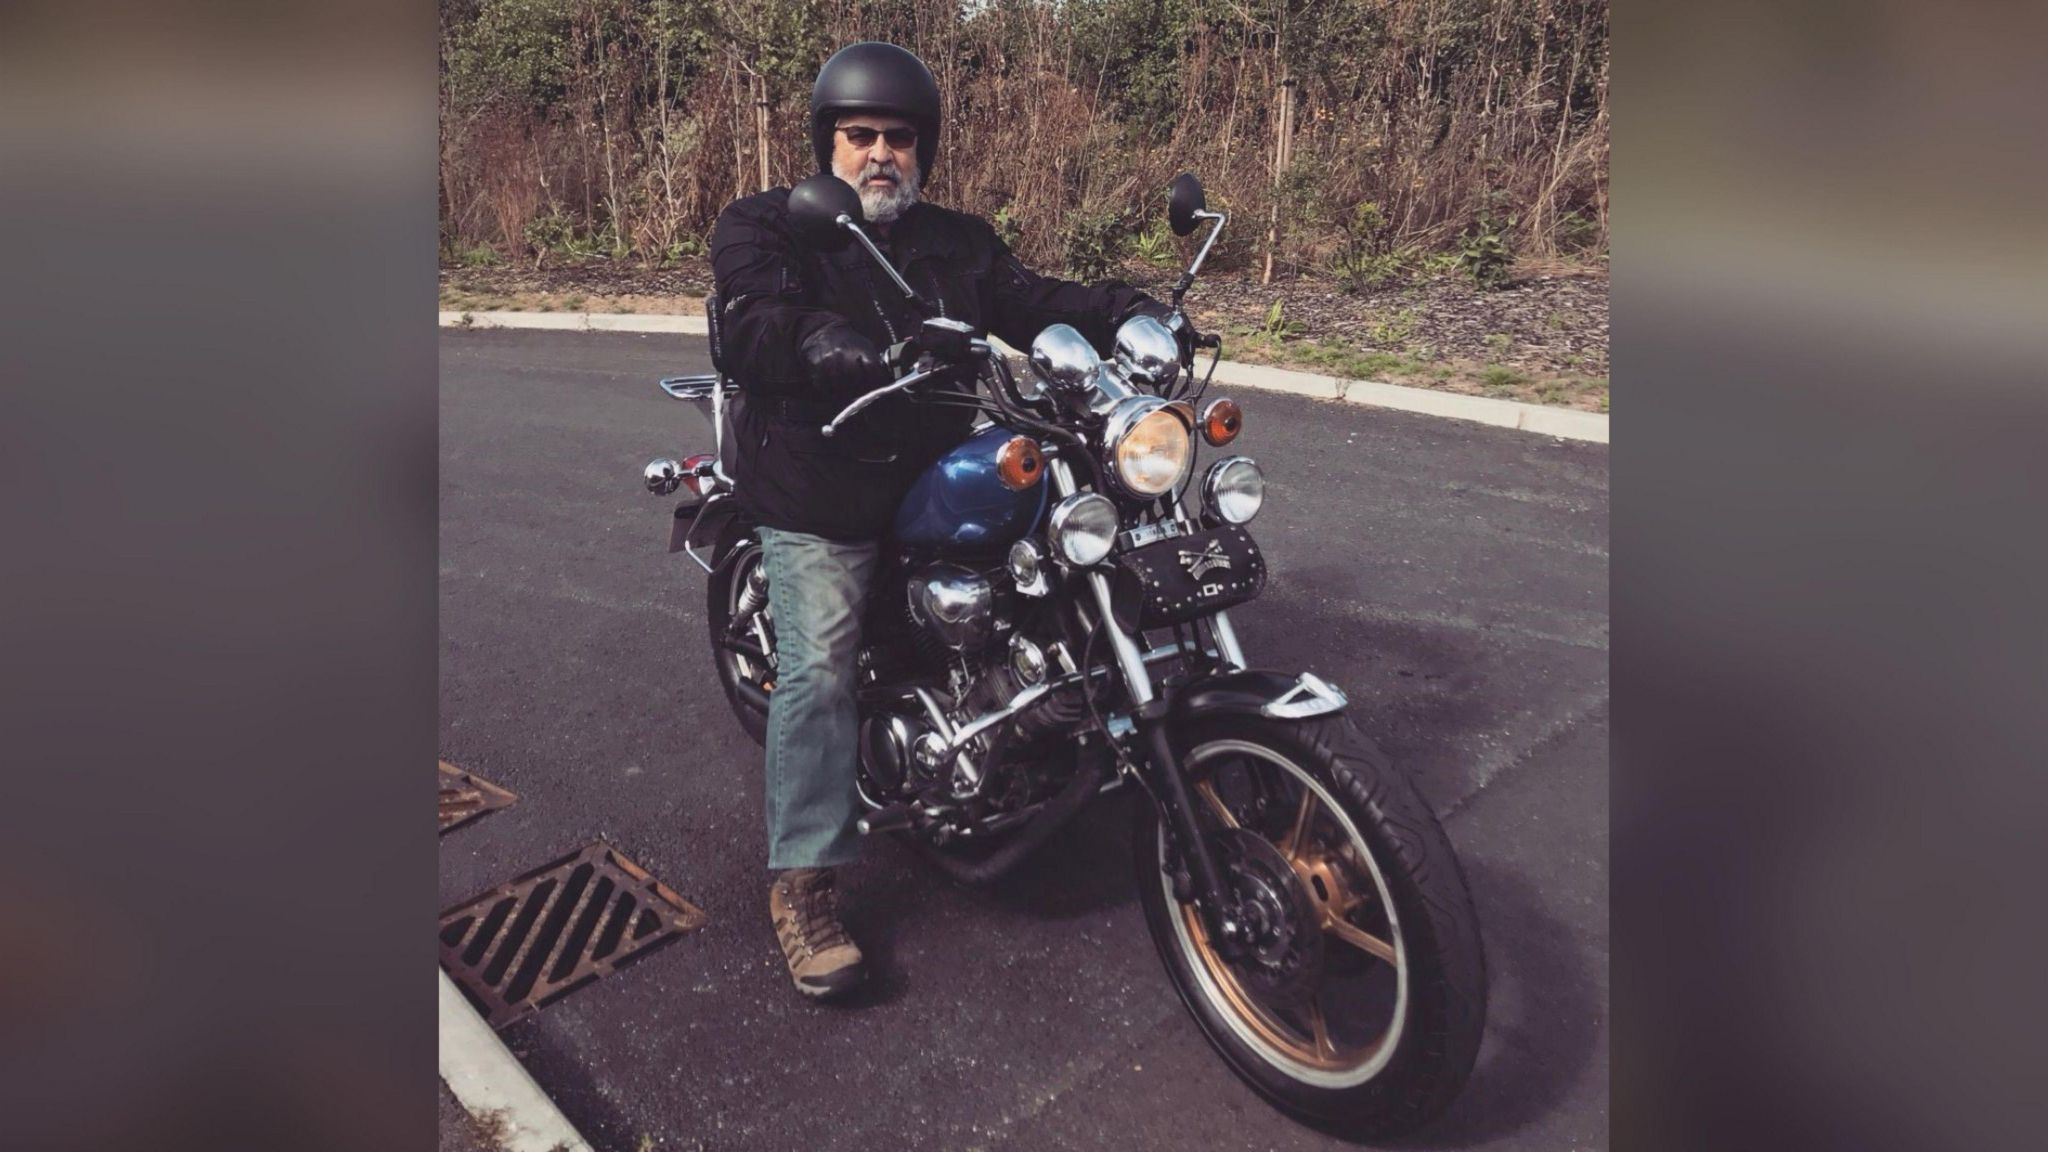 Steve Macdonald astride a black motorbike wearing light jeans, a dark motorbike jacket, black helmet and sunglasses.